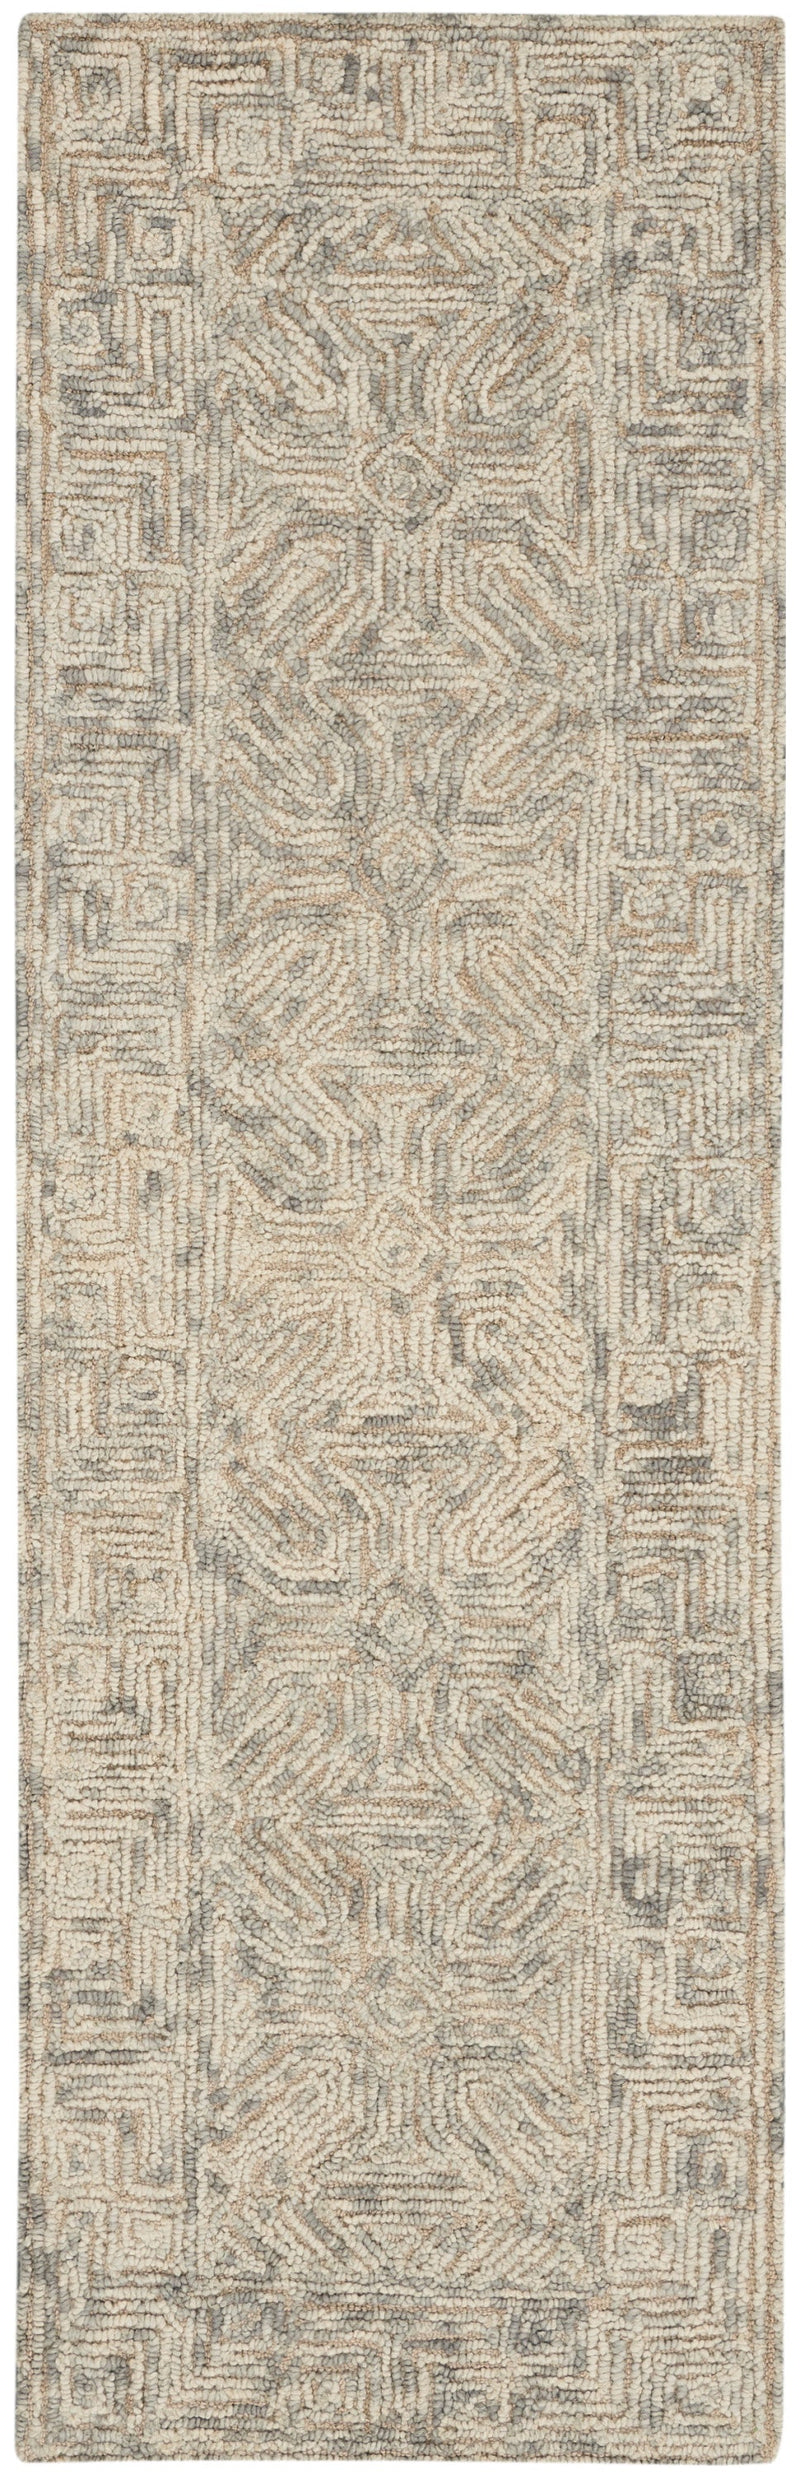 media image for colorado handmade beige grey rug by nourison 99446790316 redo 2 219